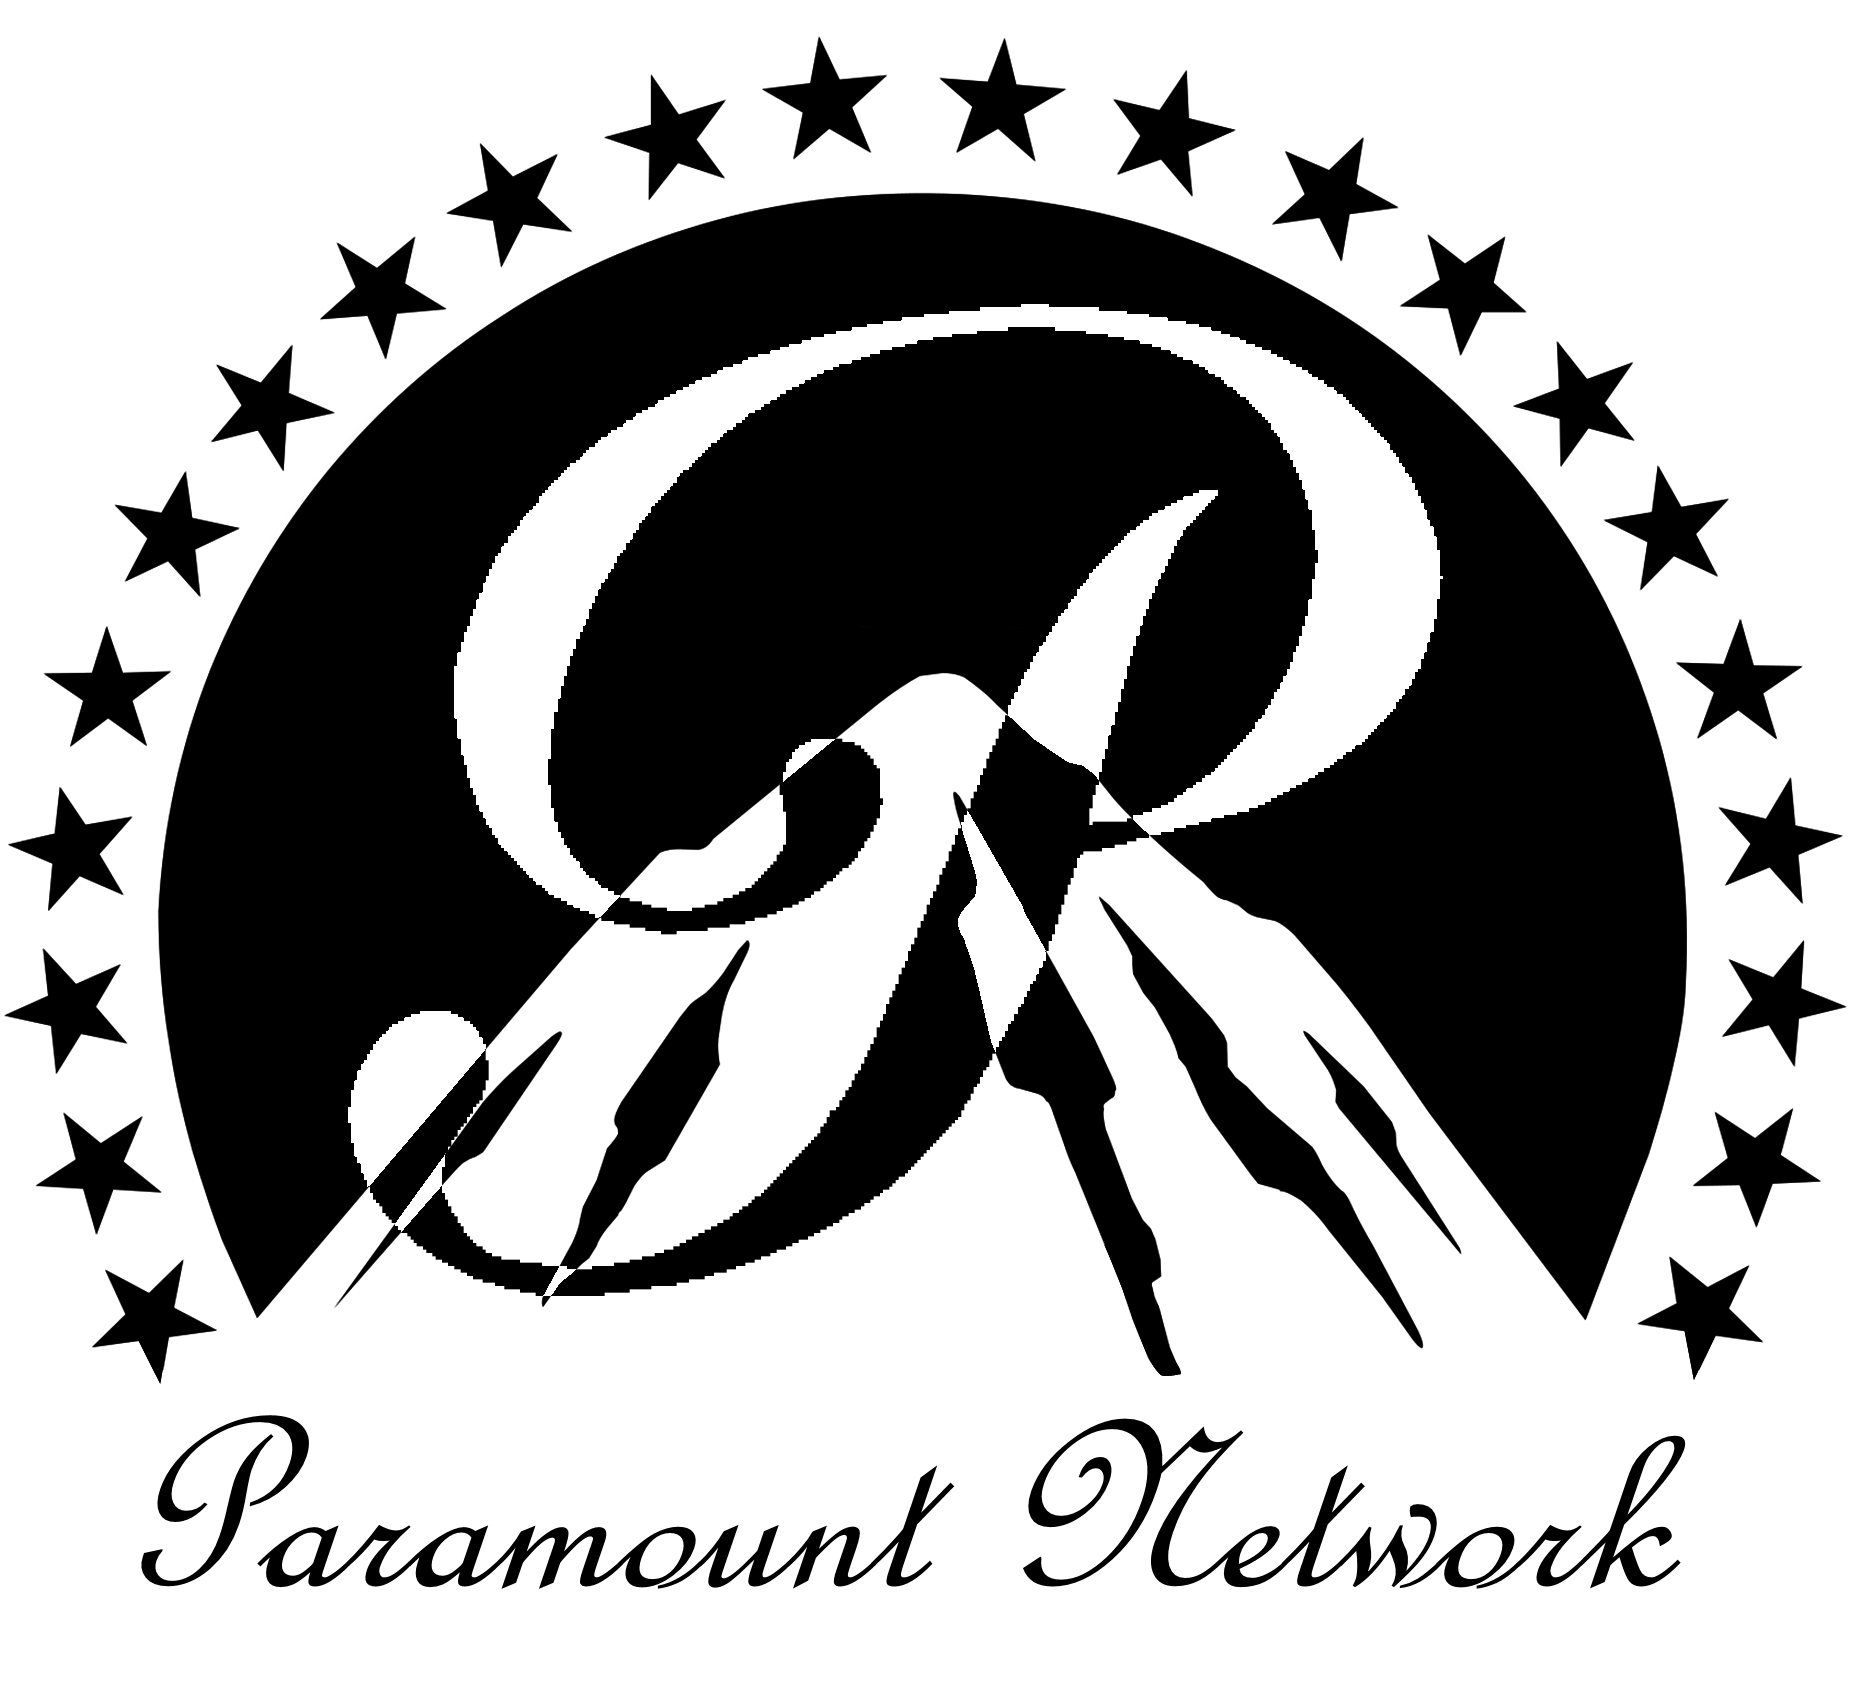 Paramount Network Logo - Paramount Network (Piramca) | Dream Logos Wiki | FANDOM powered by Wikia